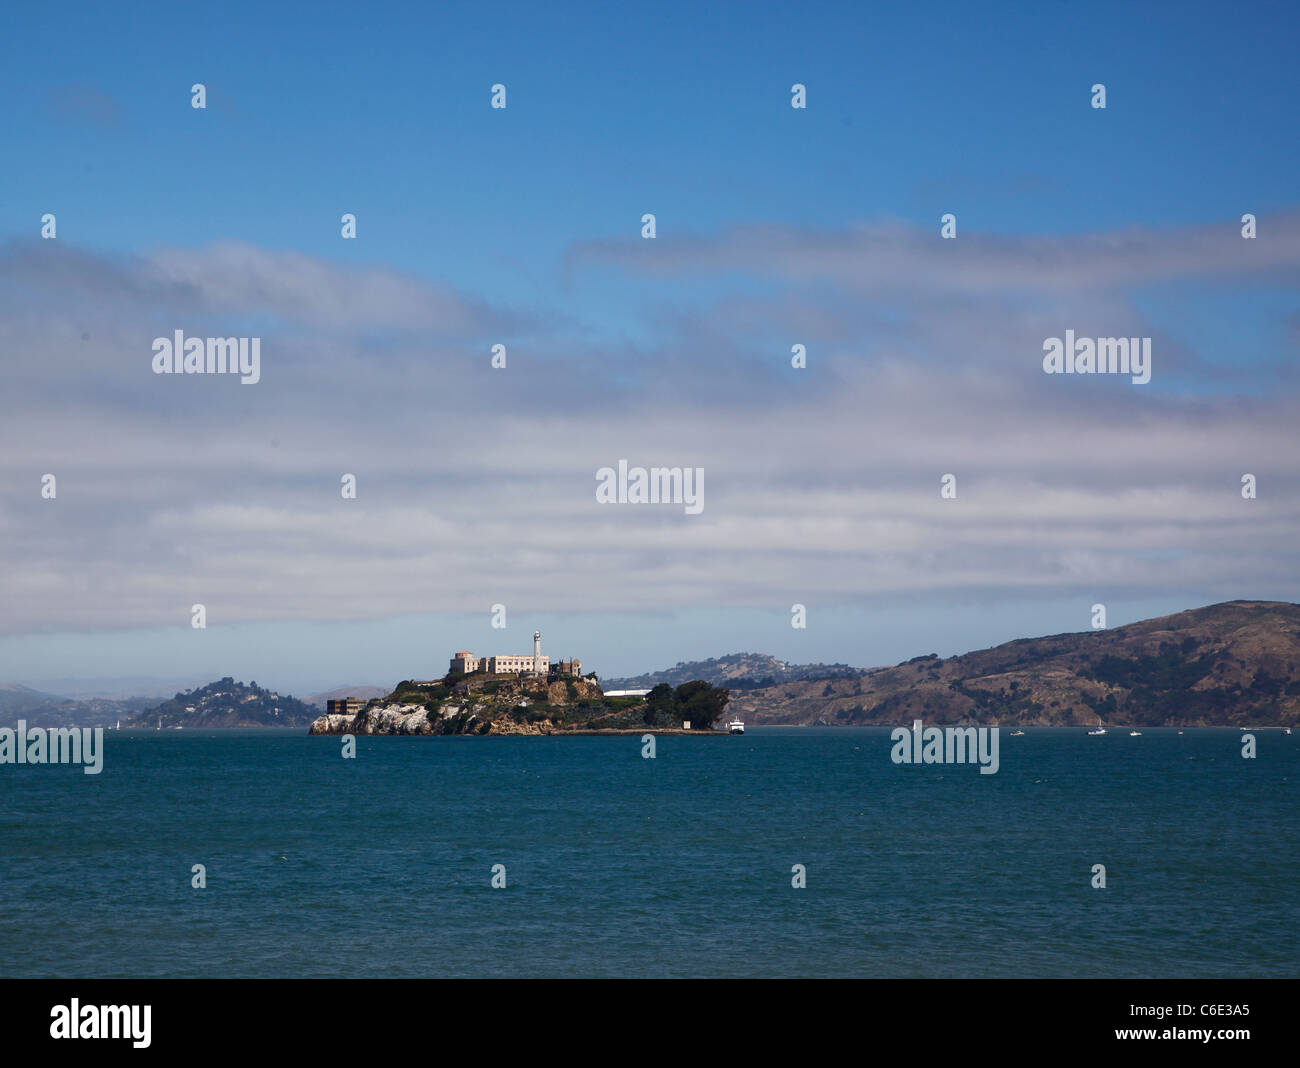 Alcatraz San Francisco bay prison island ocean Stock Photo